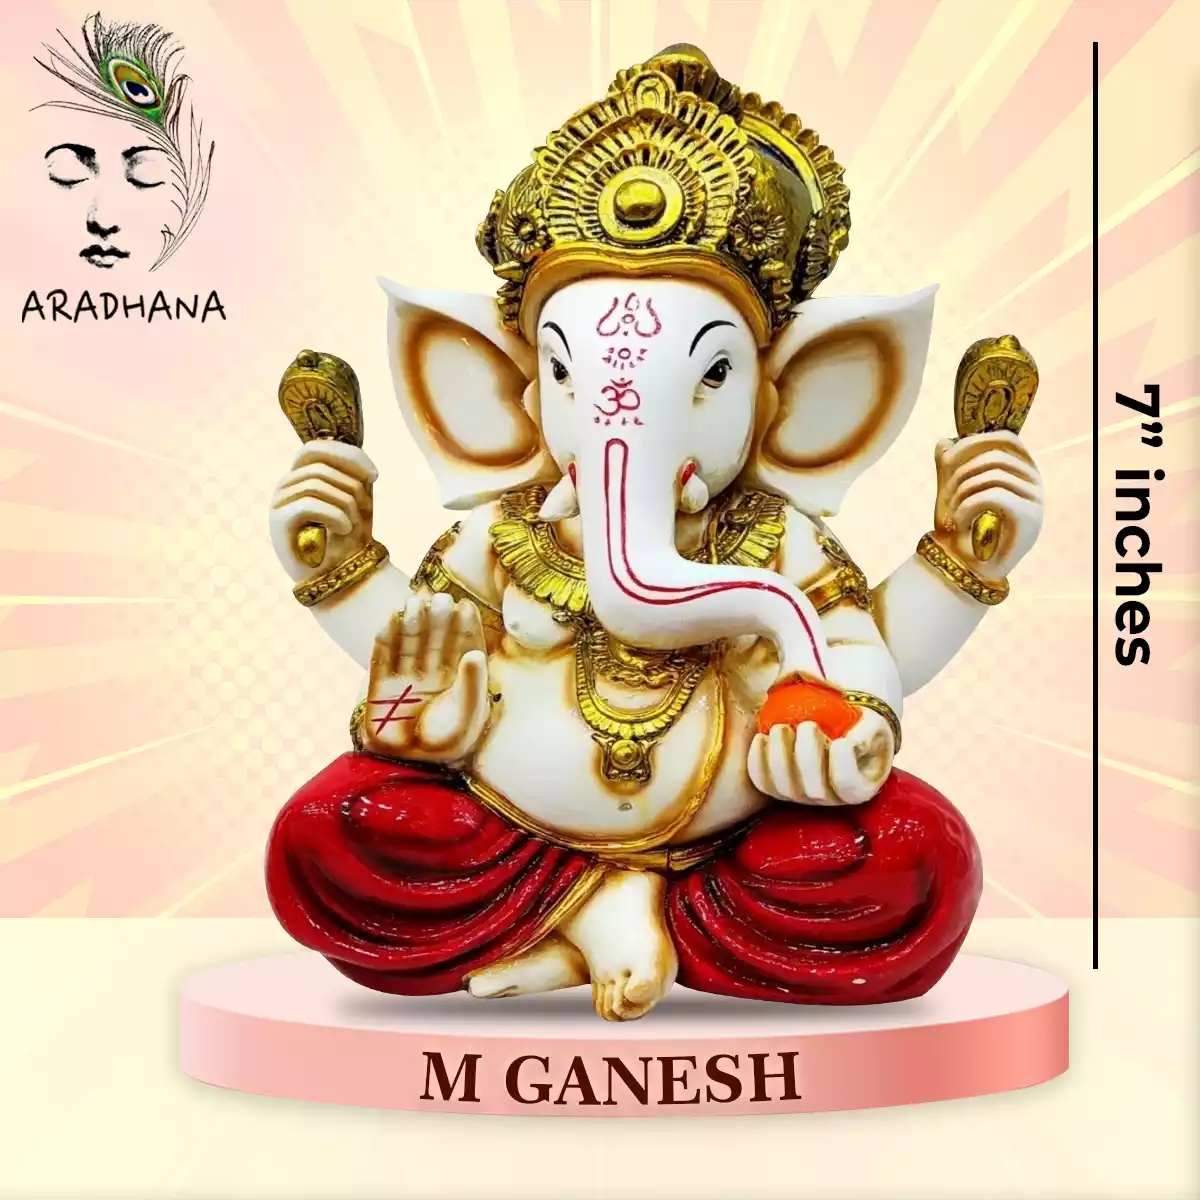 M Ganesh